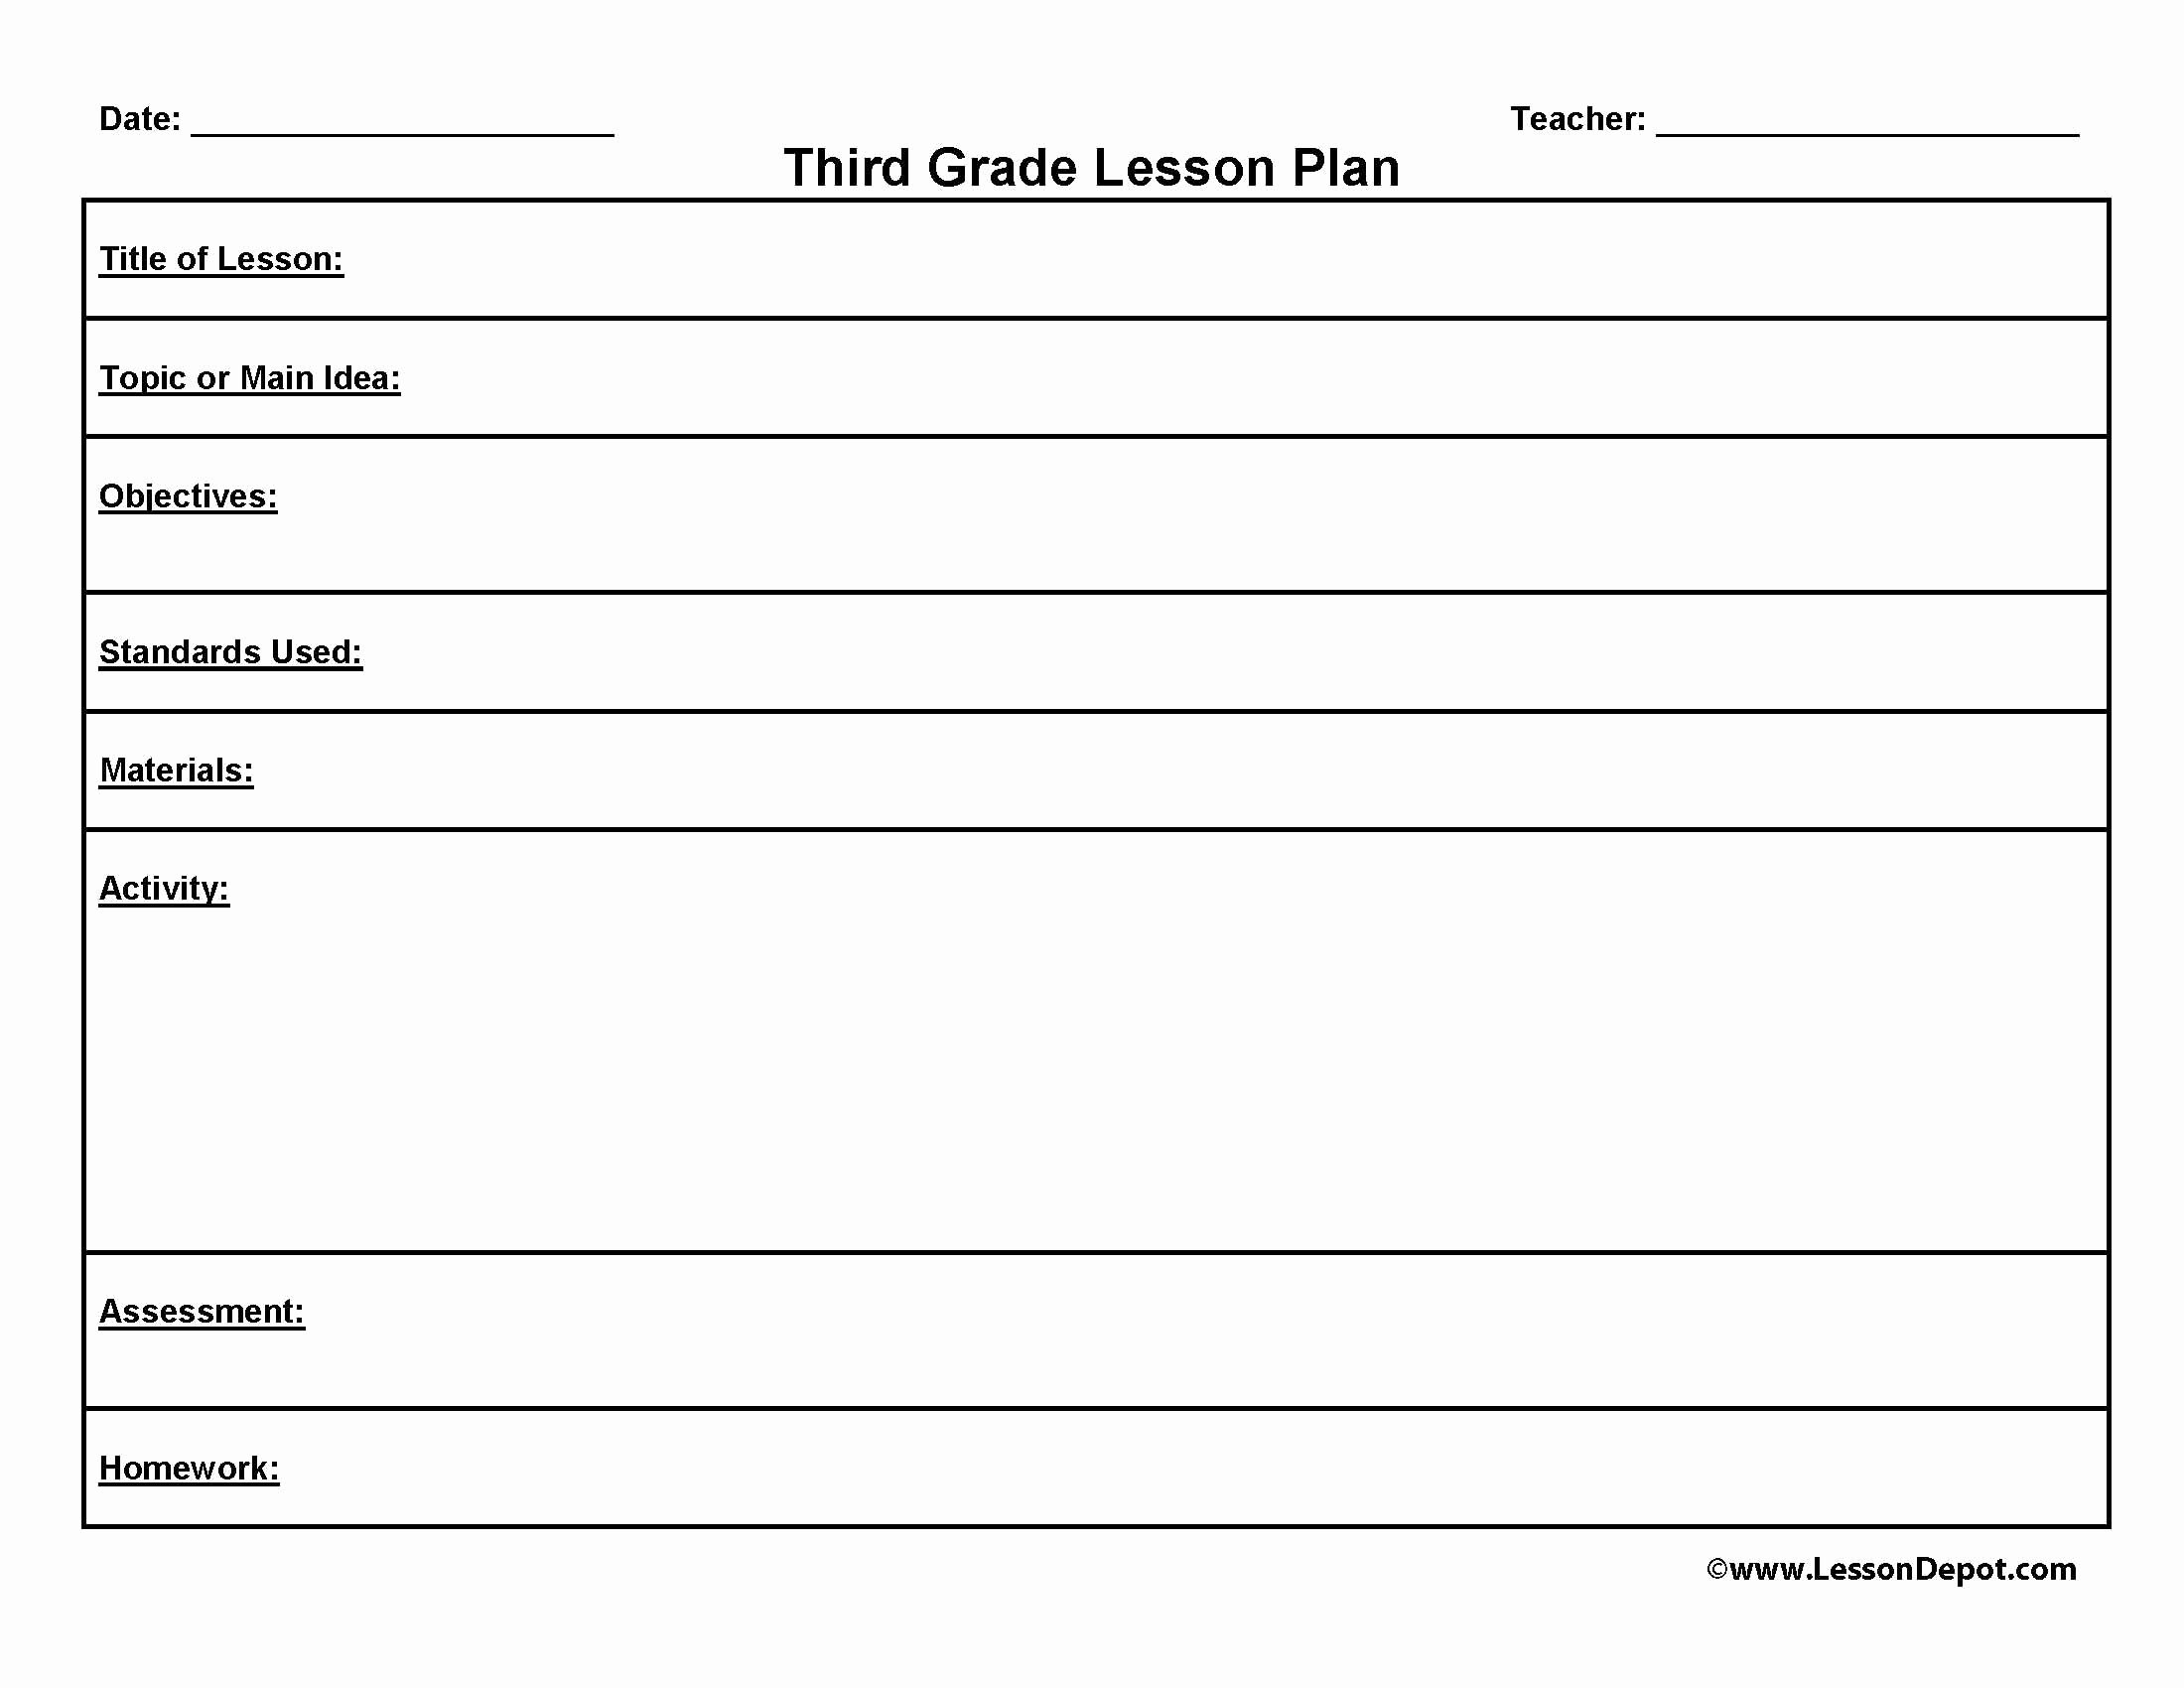 Social Studies Lesson Plan Template Luxury Third Grade Lesson Plan Template